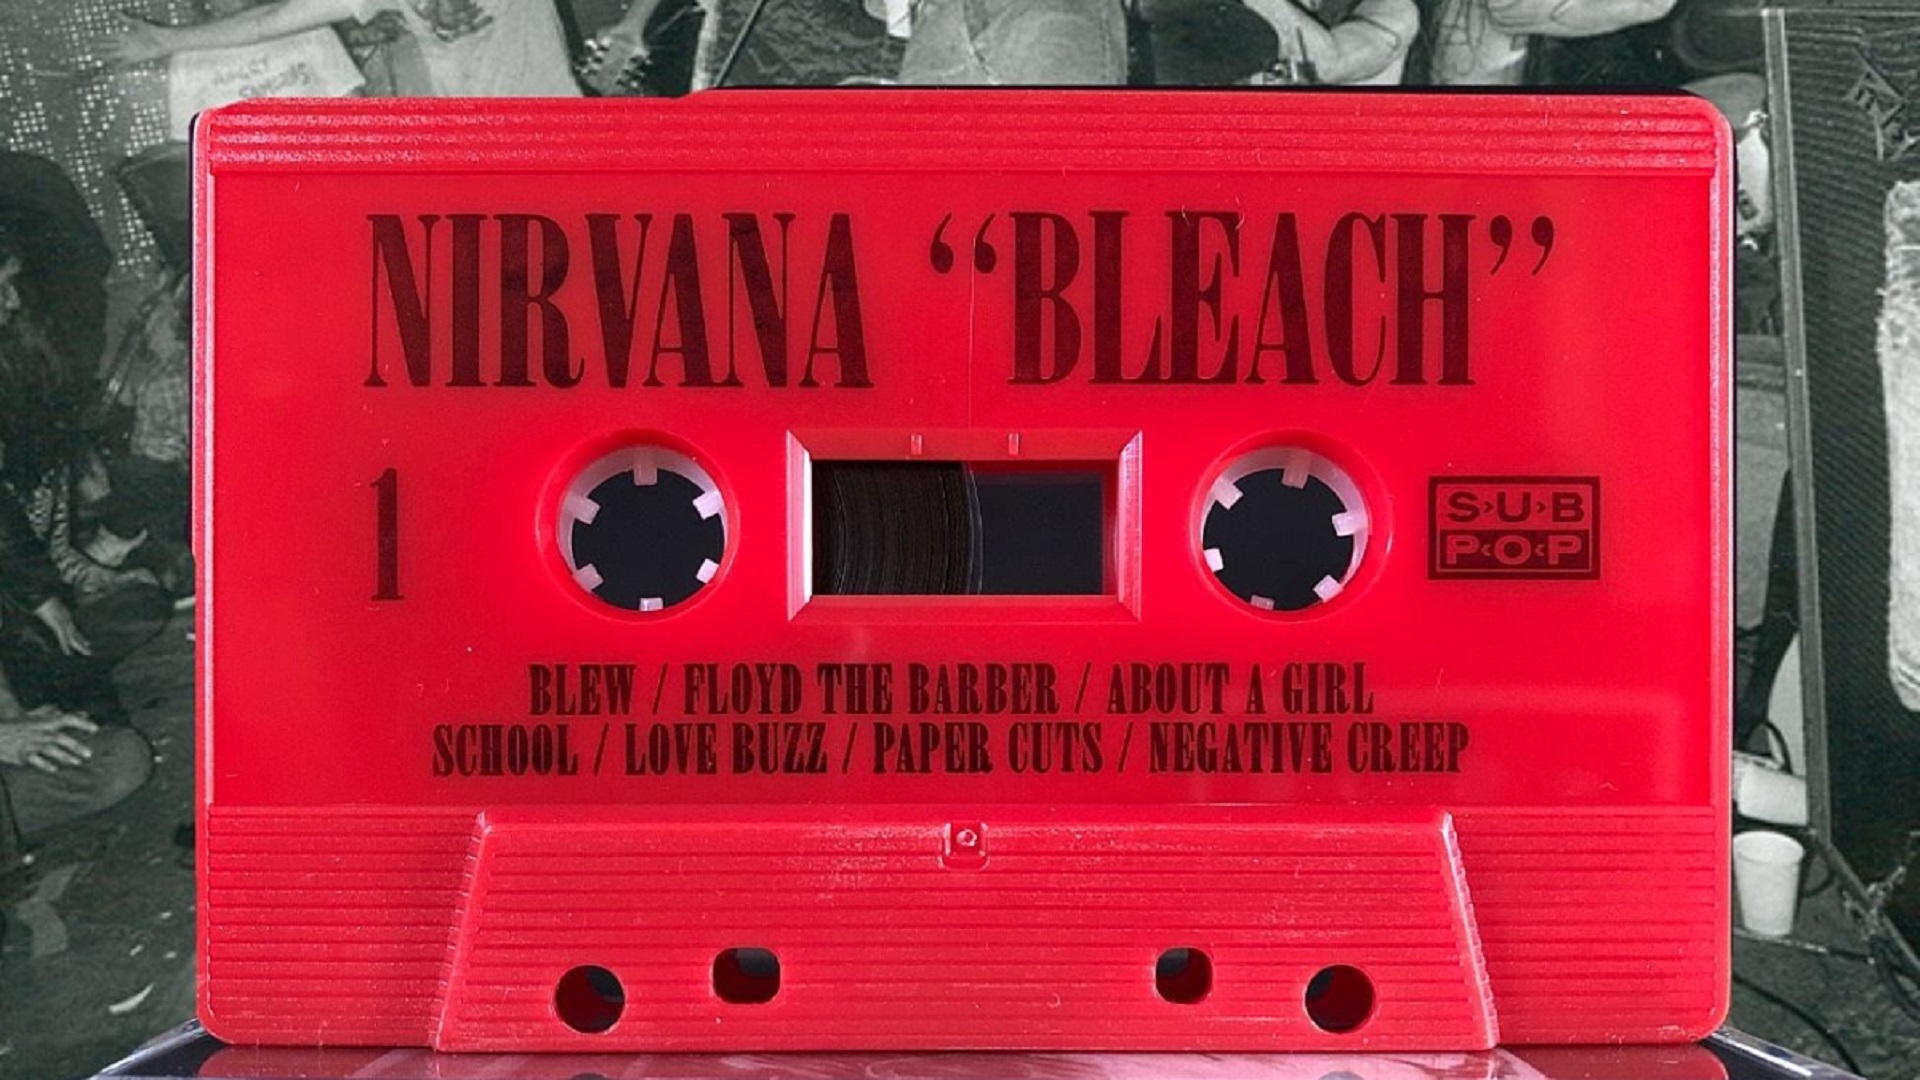 ‘Bleach’ de Nirvana tendrá versión especial